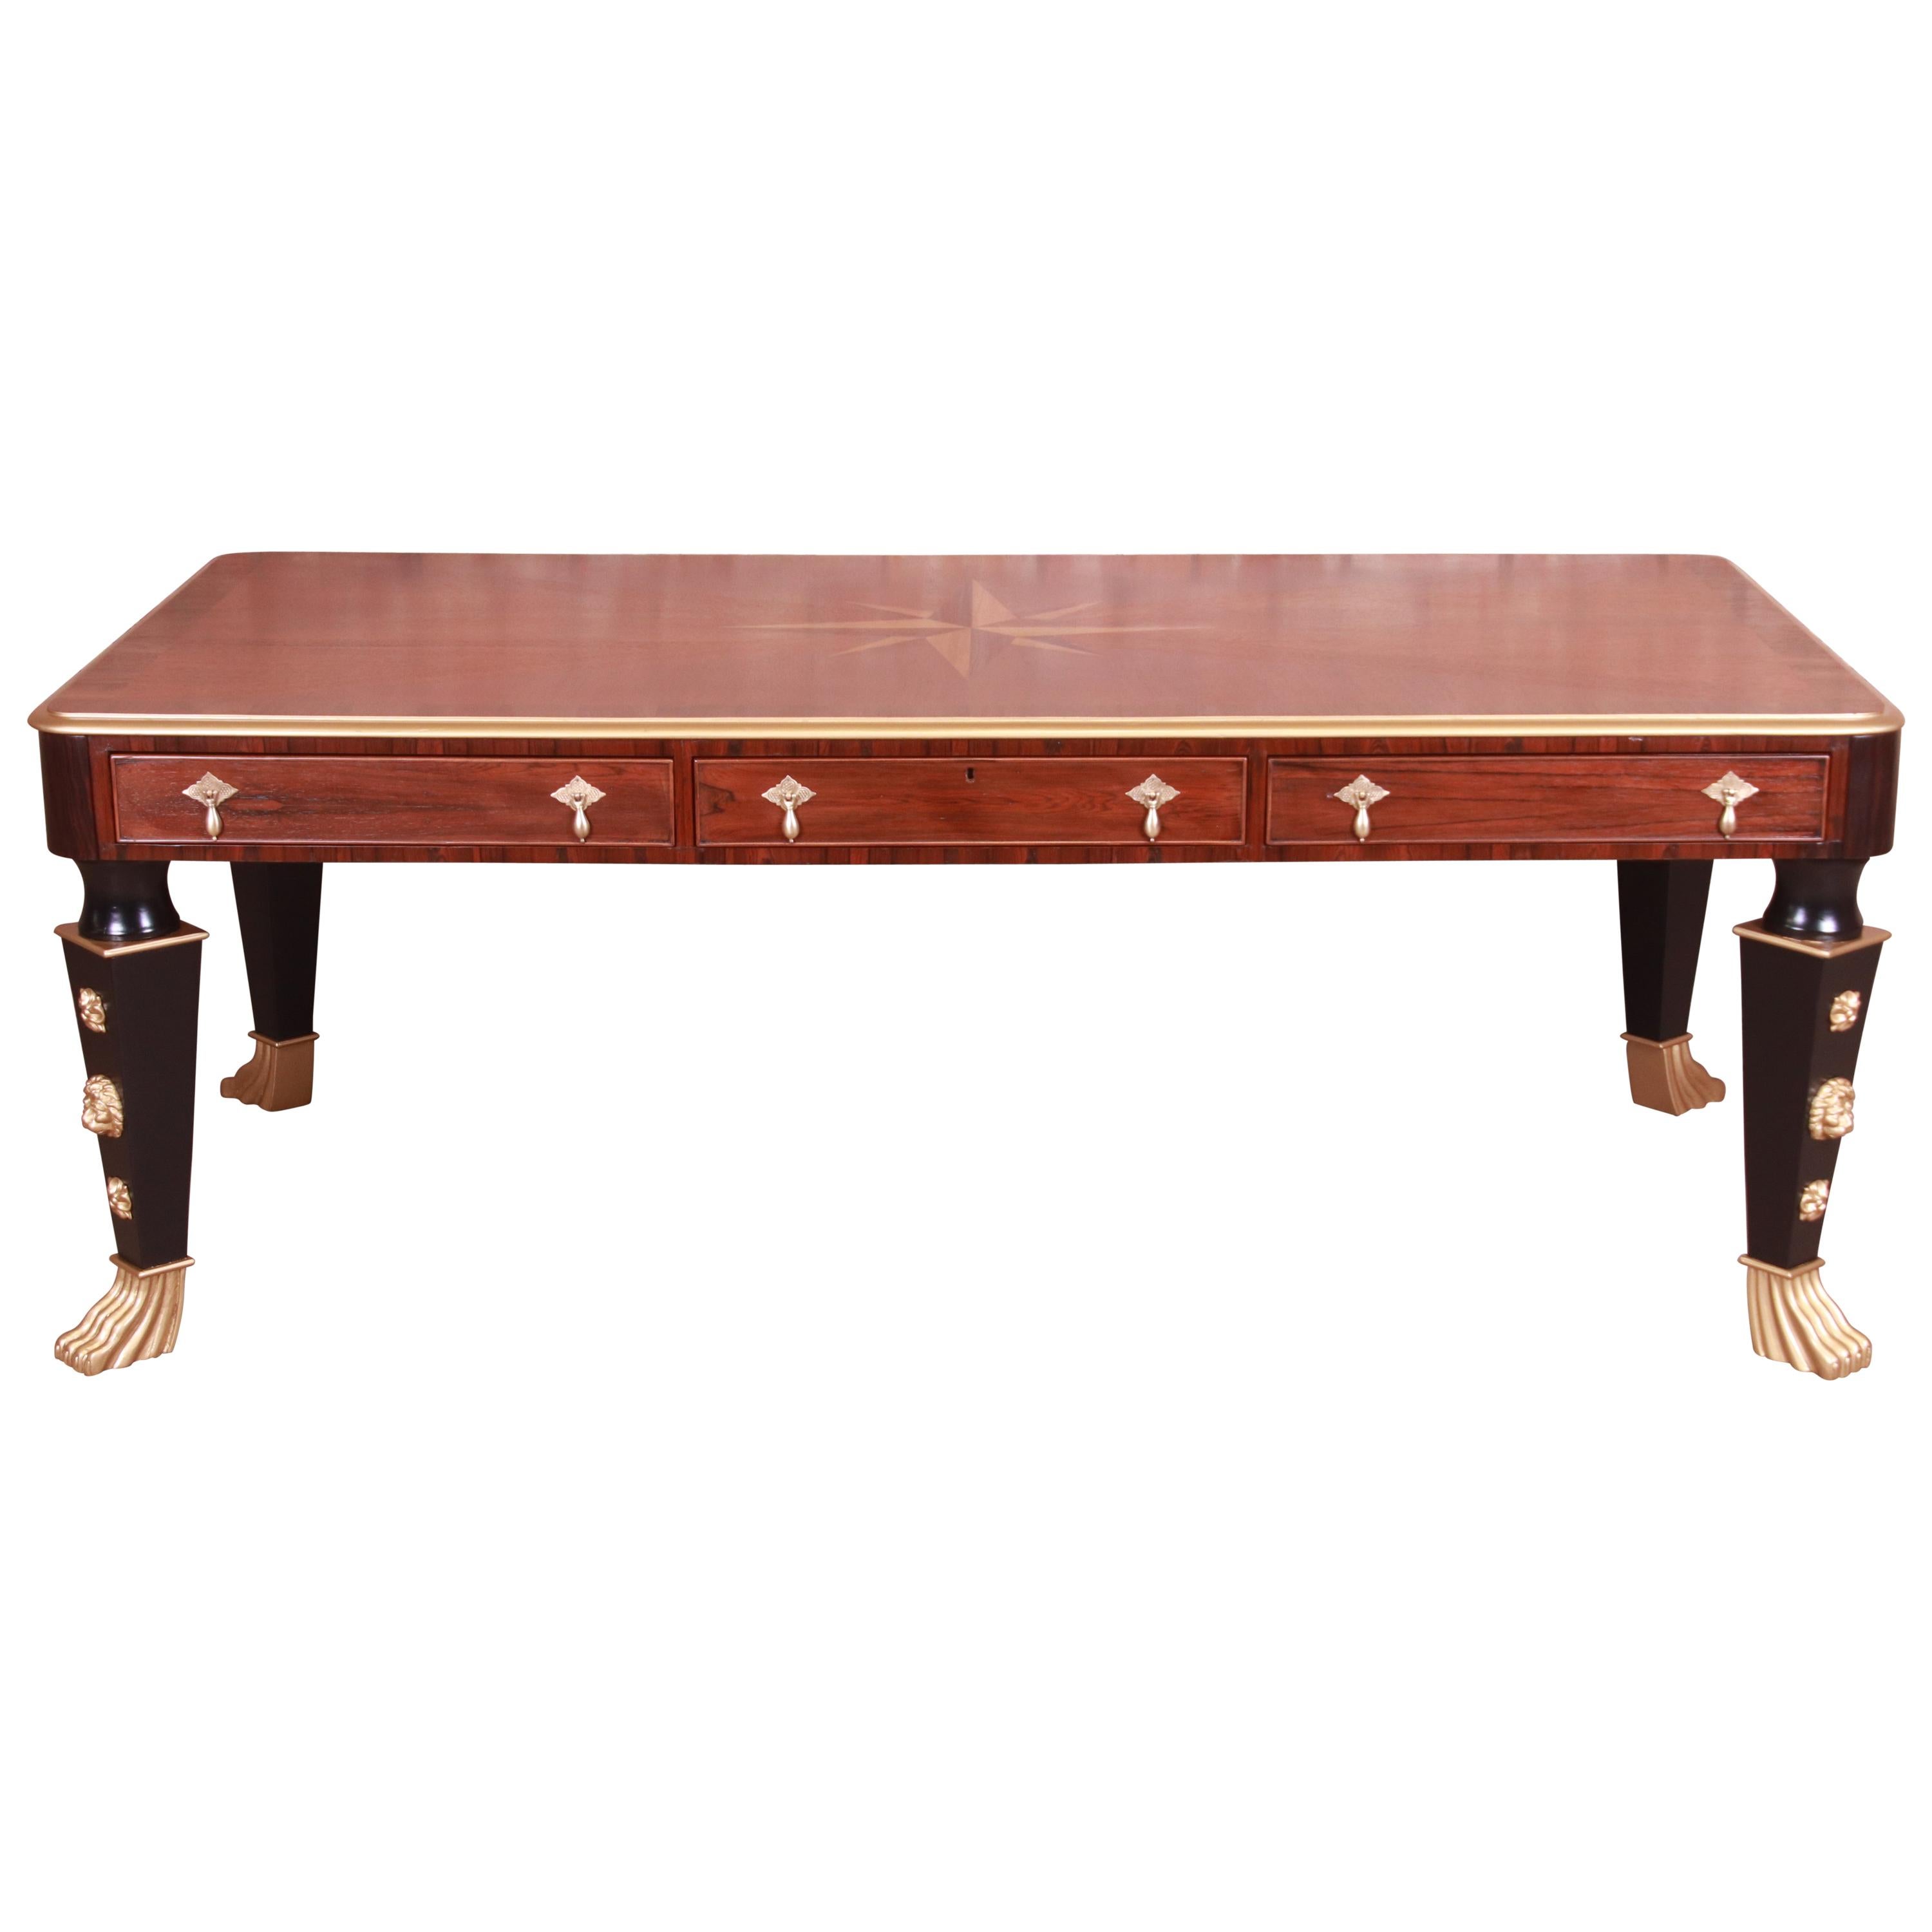 Restored Antique English Empire Rosewood Partner Desk, Circa 1820s